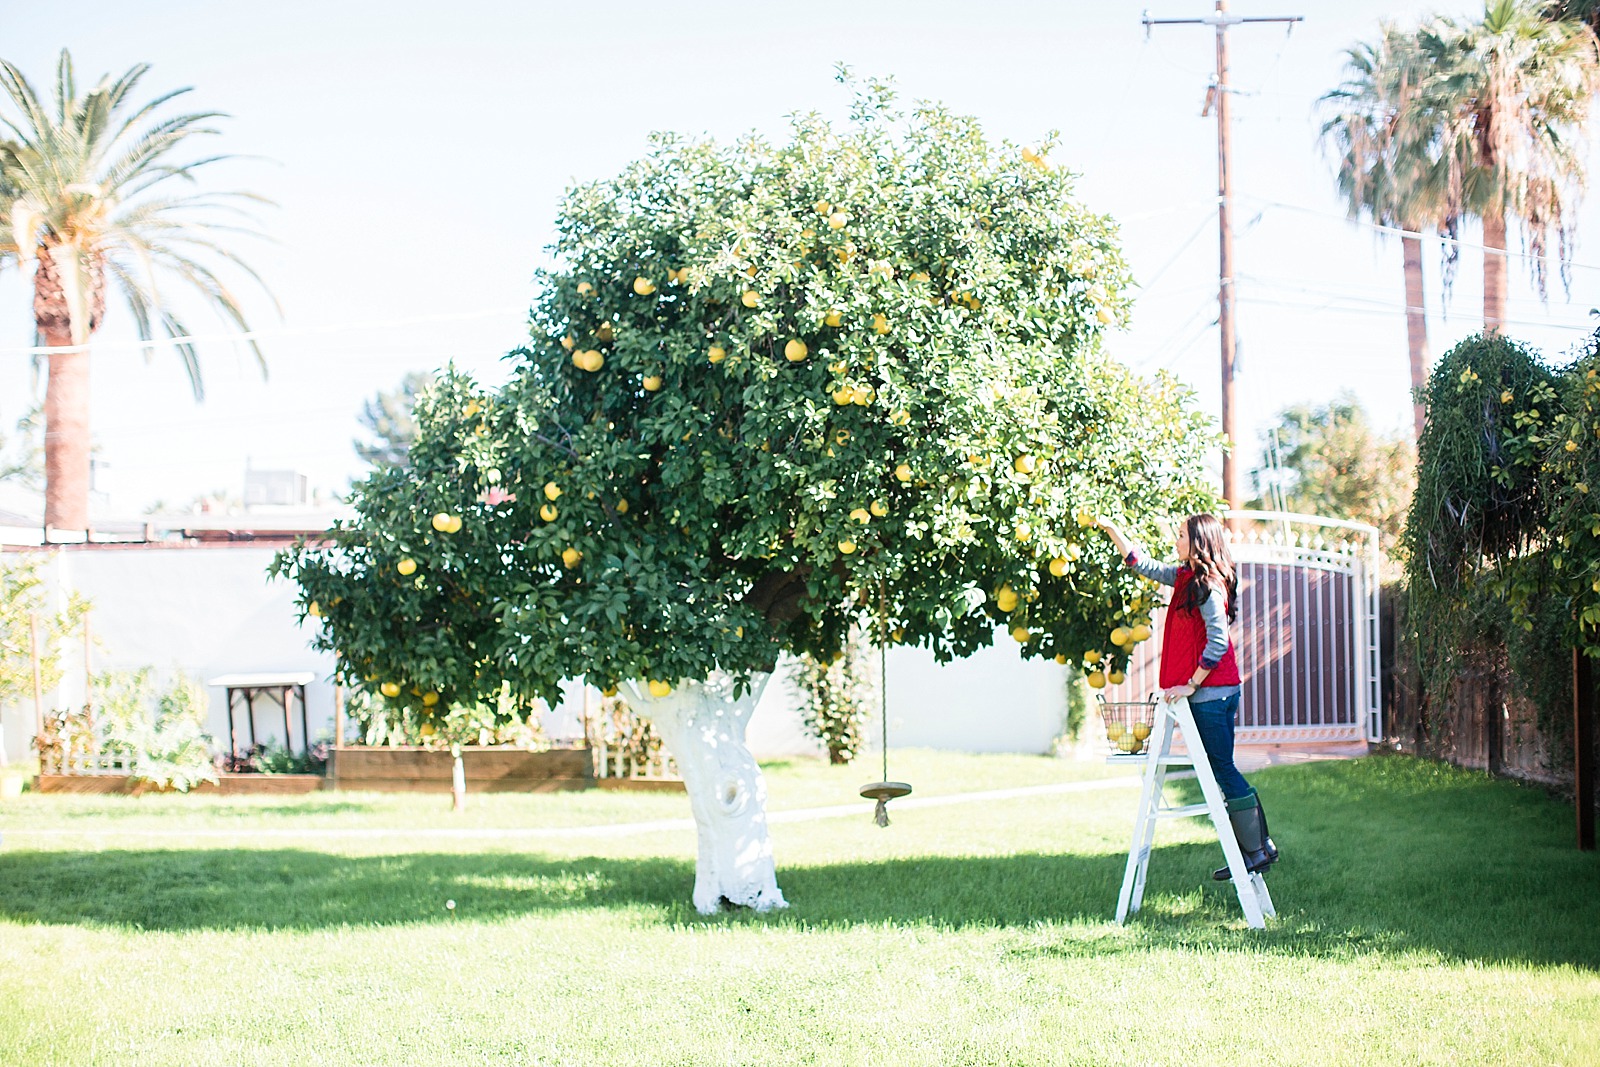 grapefruit tree picking girl on ladder